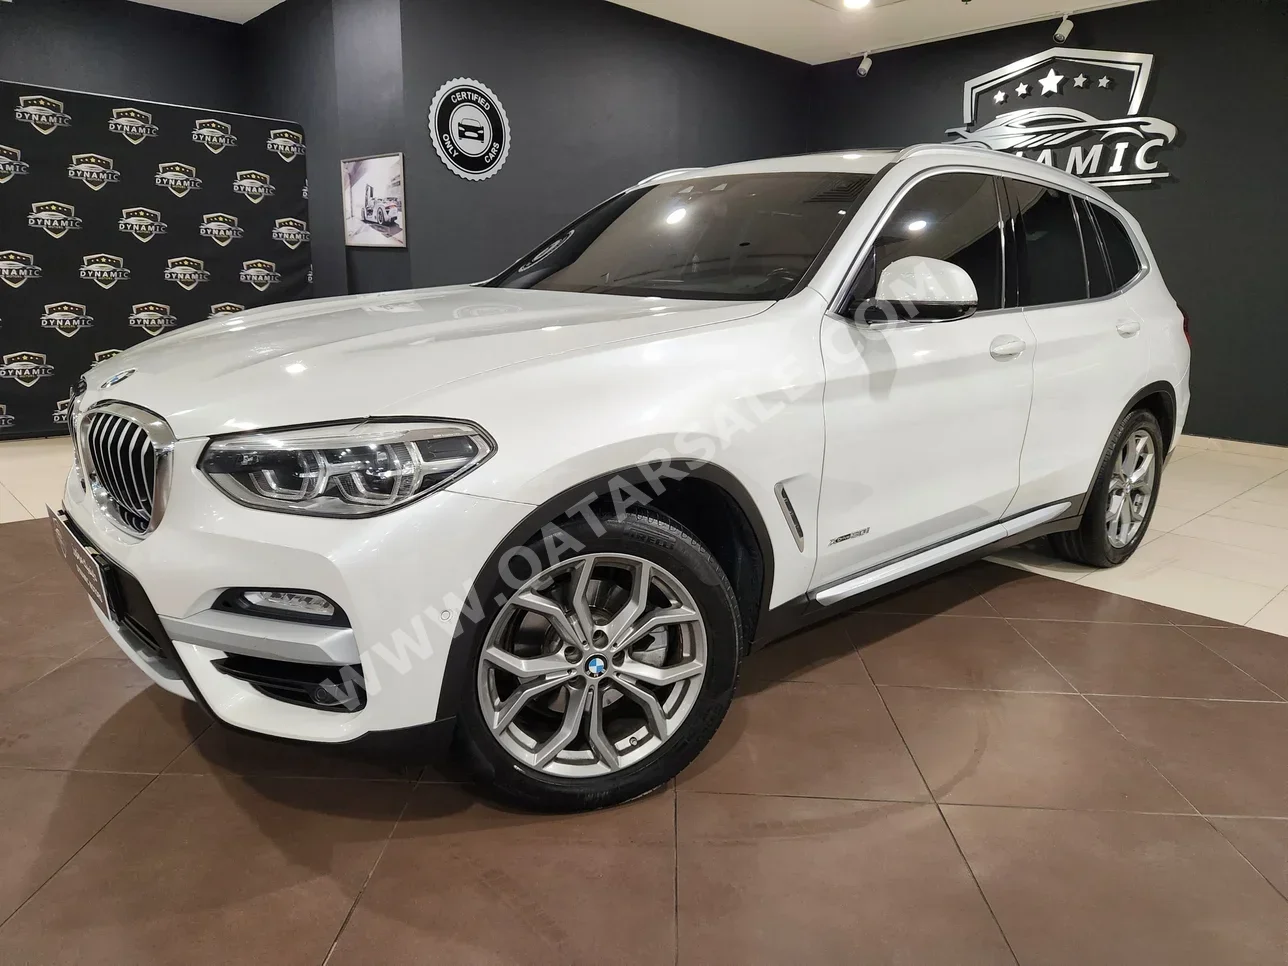 BMW  X-Series  X3  2018  Automatic  102,000 Km  4 Cylinder  Four Wheel Drive (4WD)  SUV  White